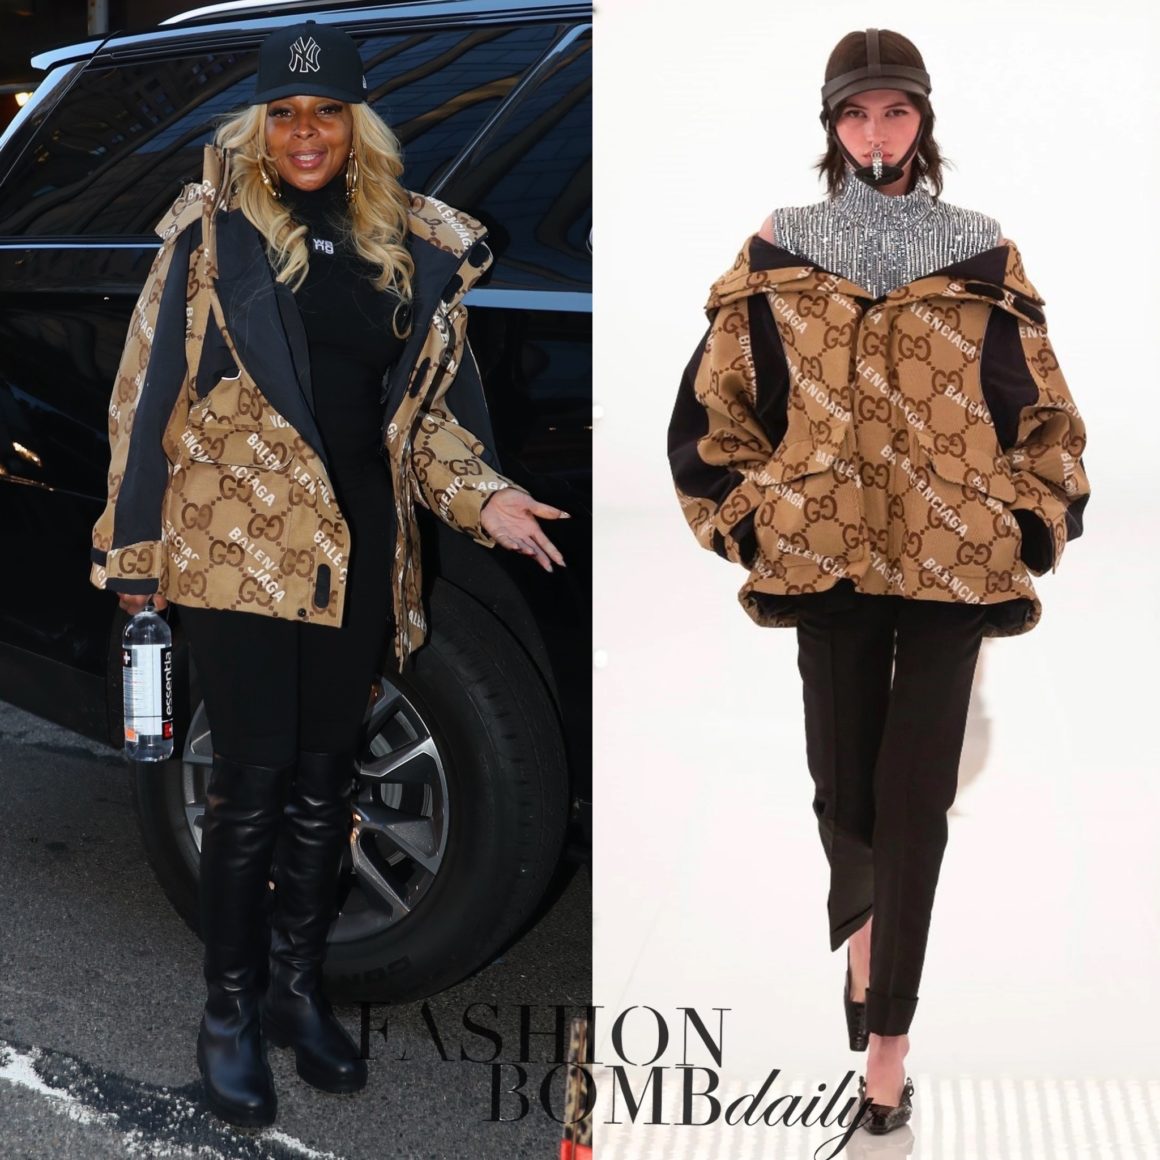 Gucci*Balenciaga and Gucci Designer Fabrics JDNZ347 for Jackets